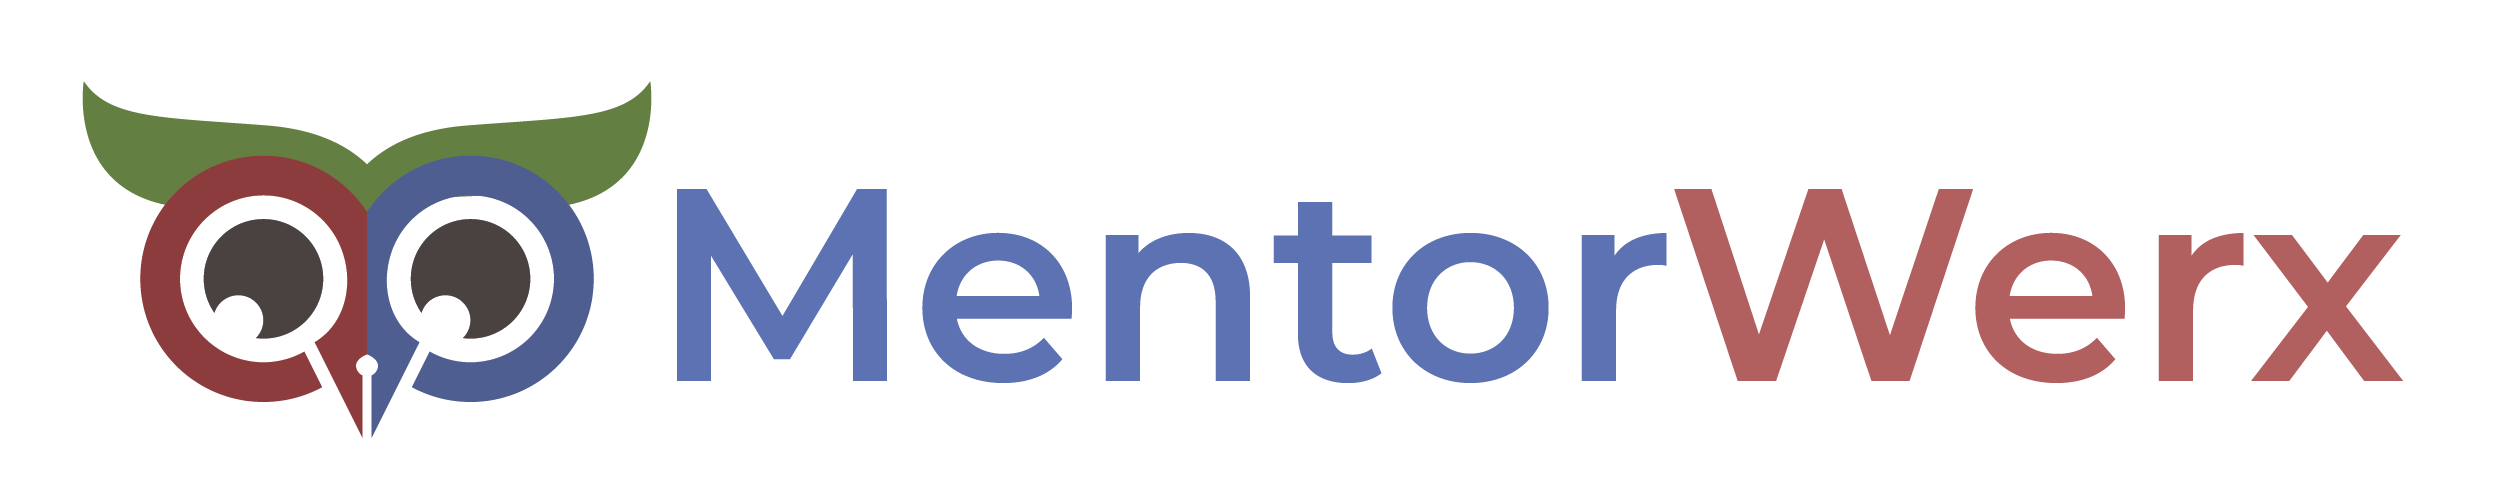 MentorWerx logo